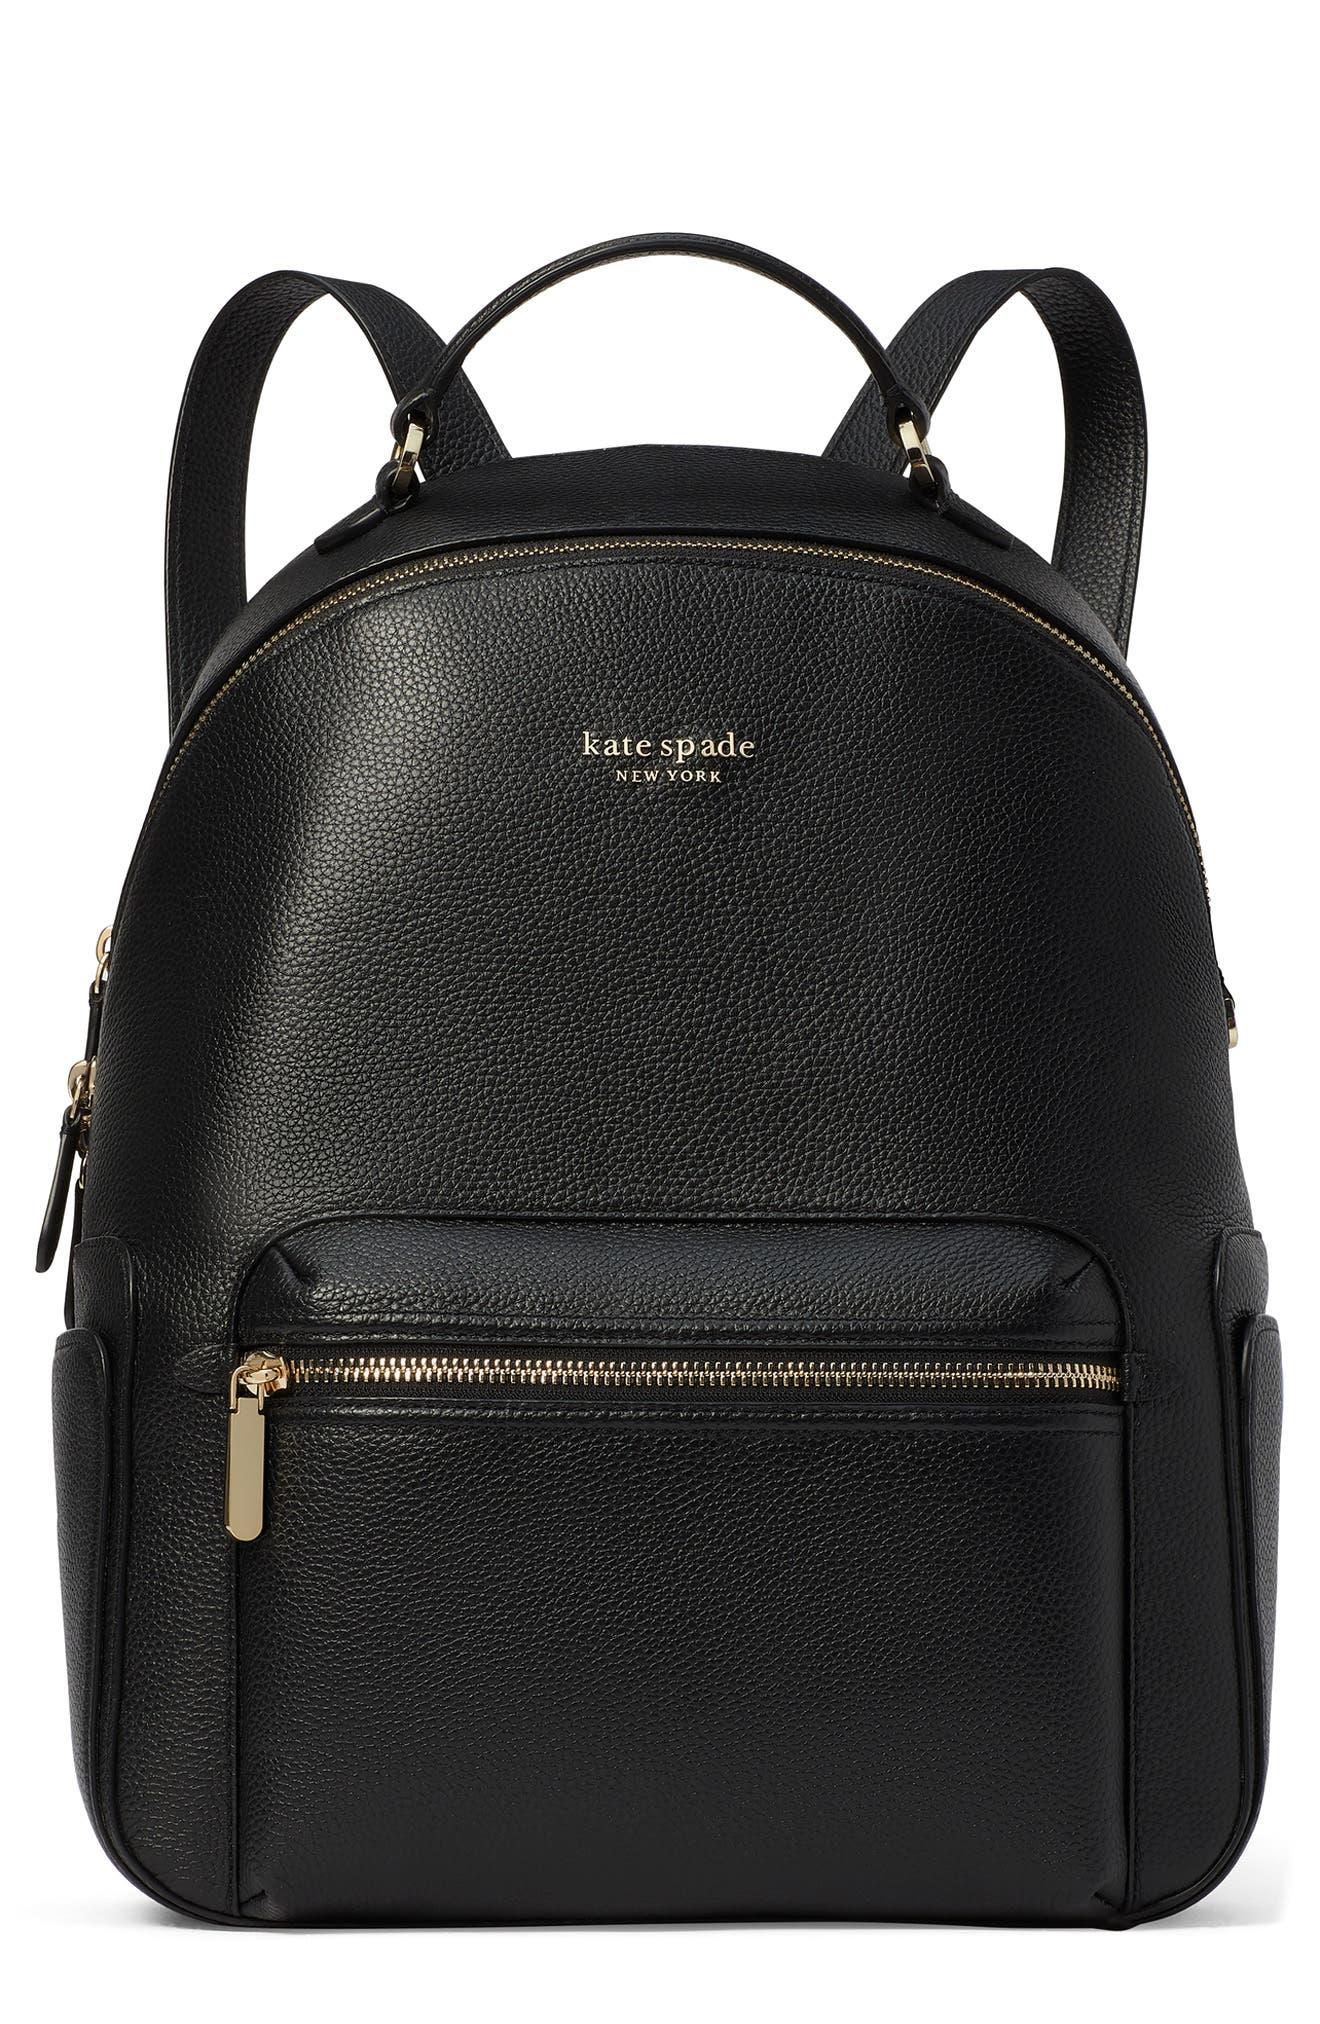 Kate Spade Hudson Pebbled Leather Backpack in Black | Lyst